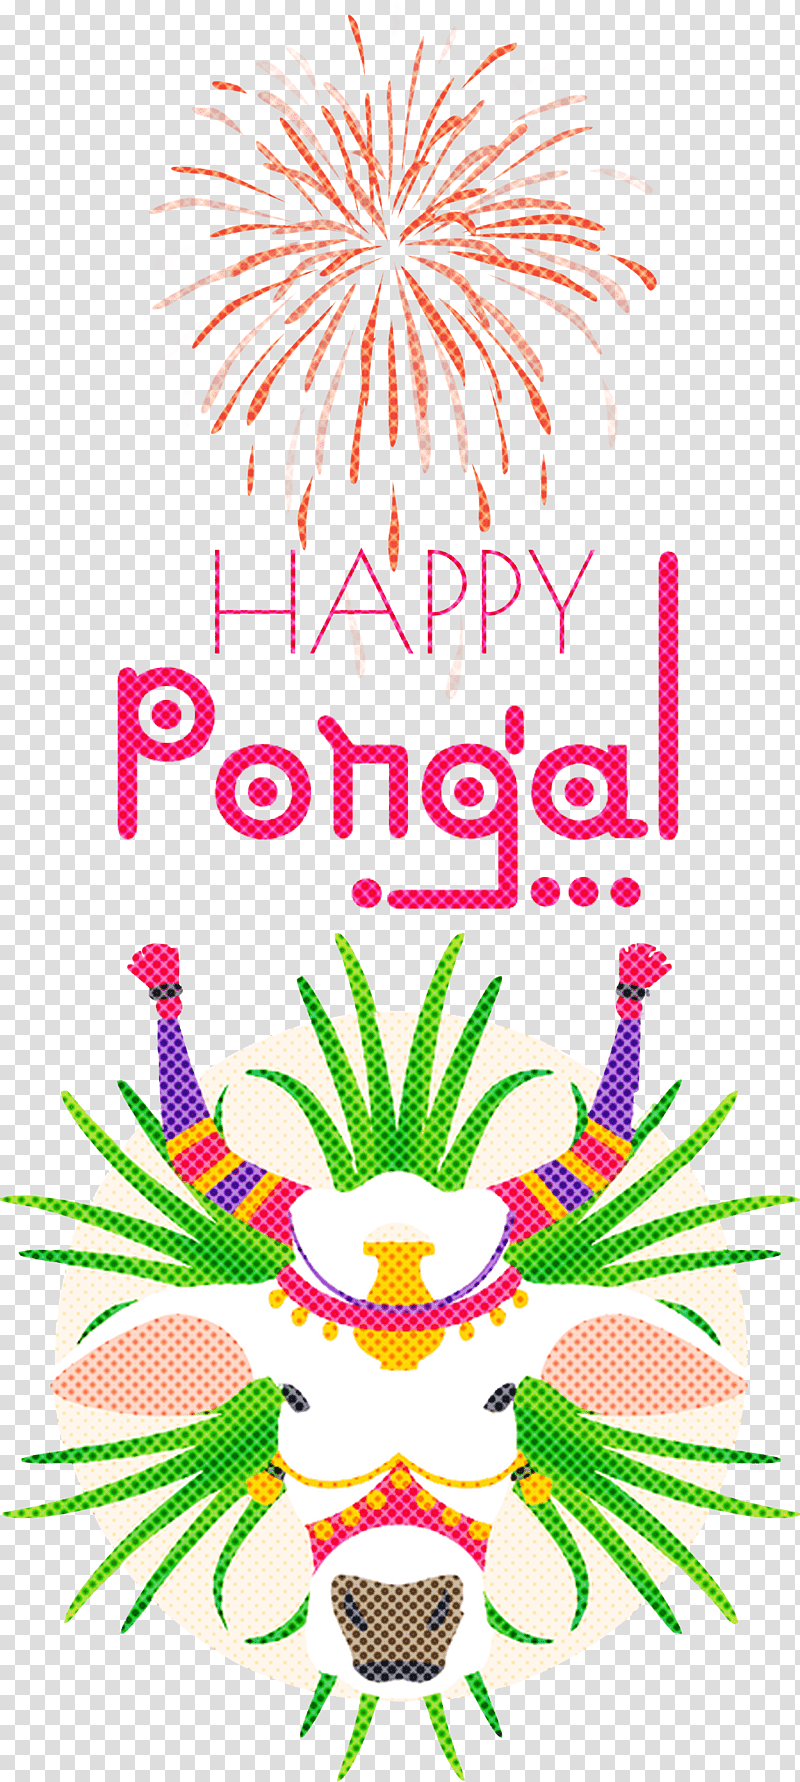 Pongal Happy Pongal, Makar Sankranti, Onam, Lohri, Festival, Harvest Festival, Bhogi transparent background PNG clipart